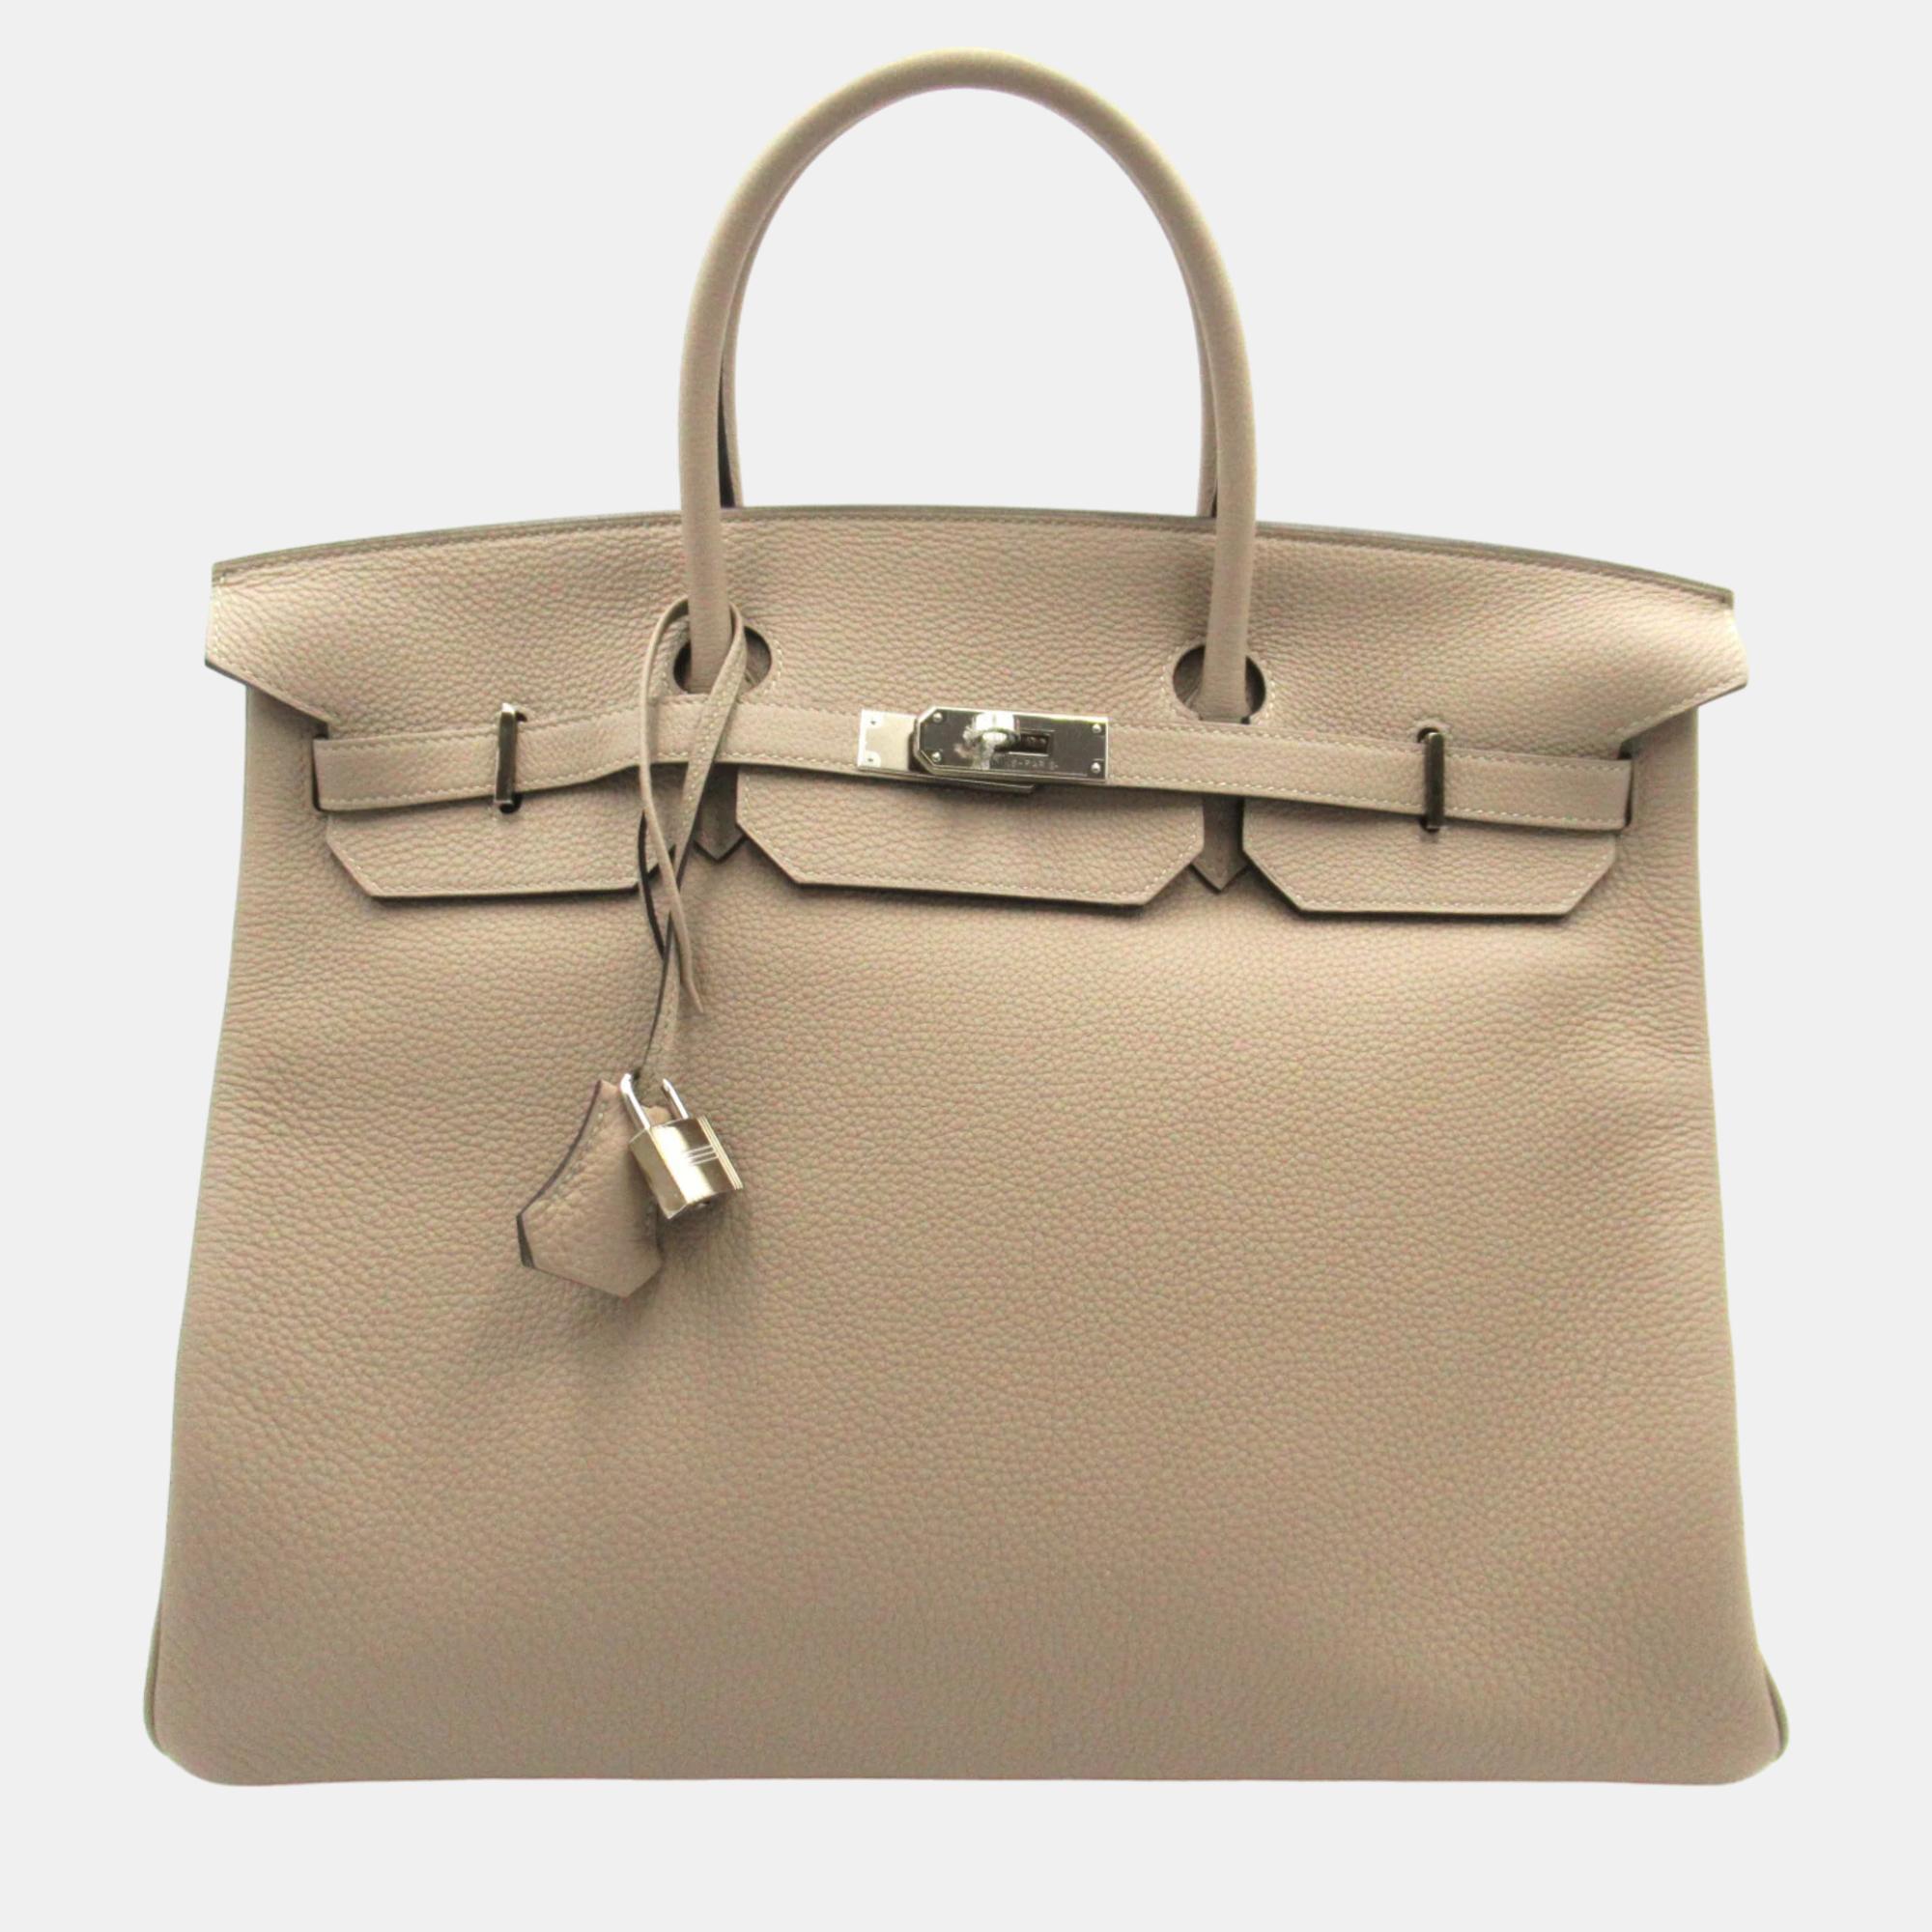 Hermes gray gris tourierelle togo leather calfskin (cowhide) birkin handbag